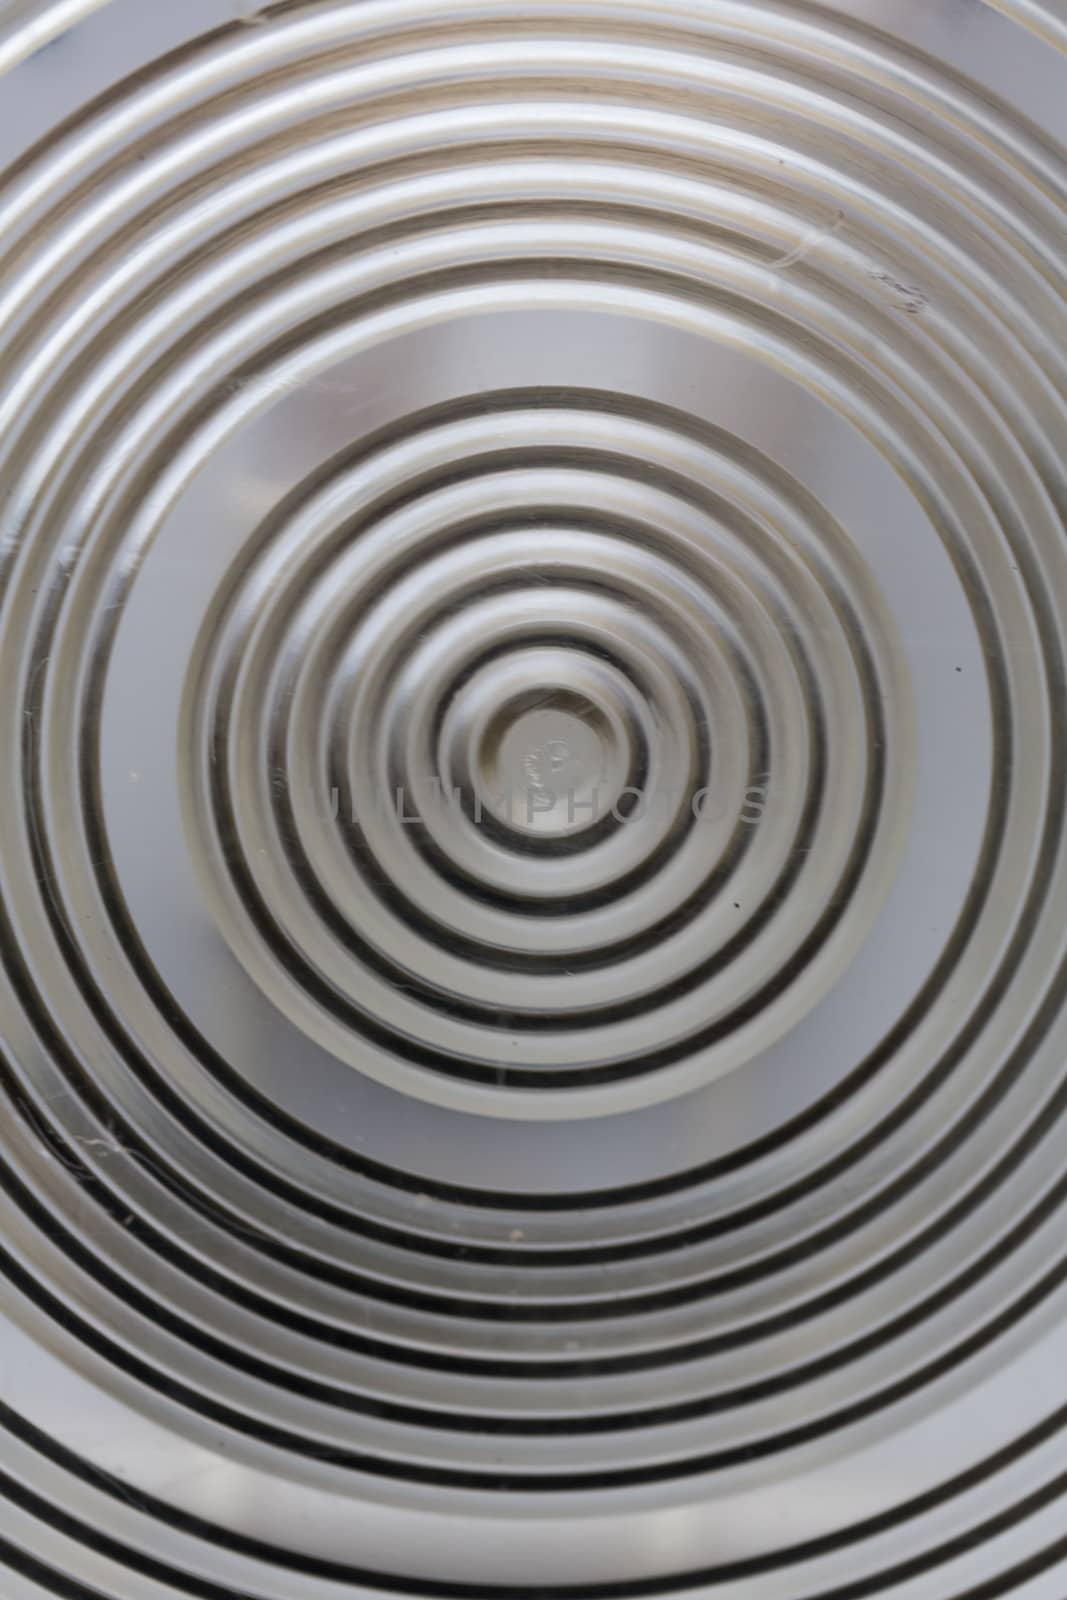 Thick circled aluminum surface. Creative design